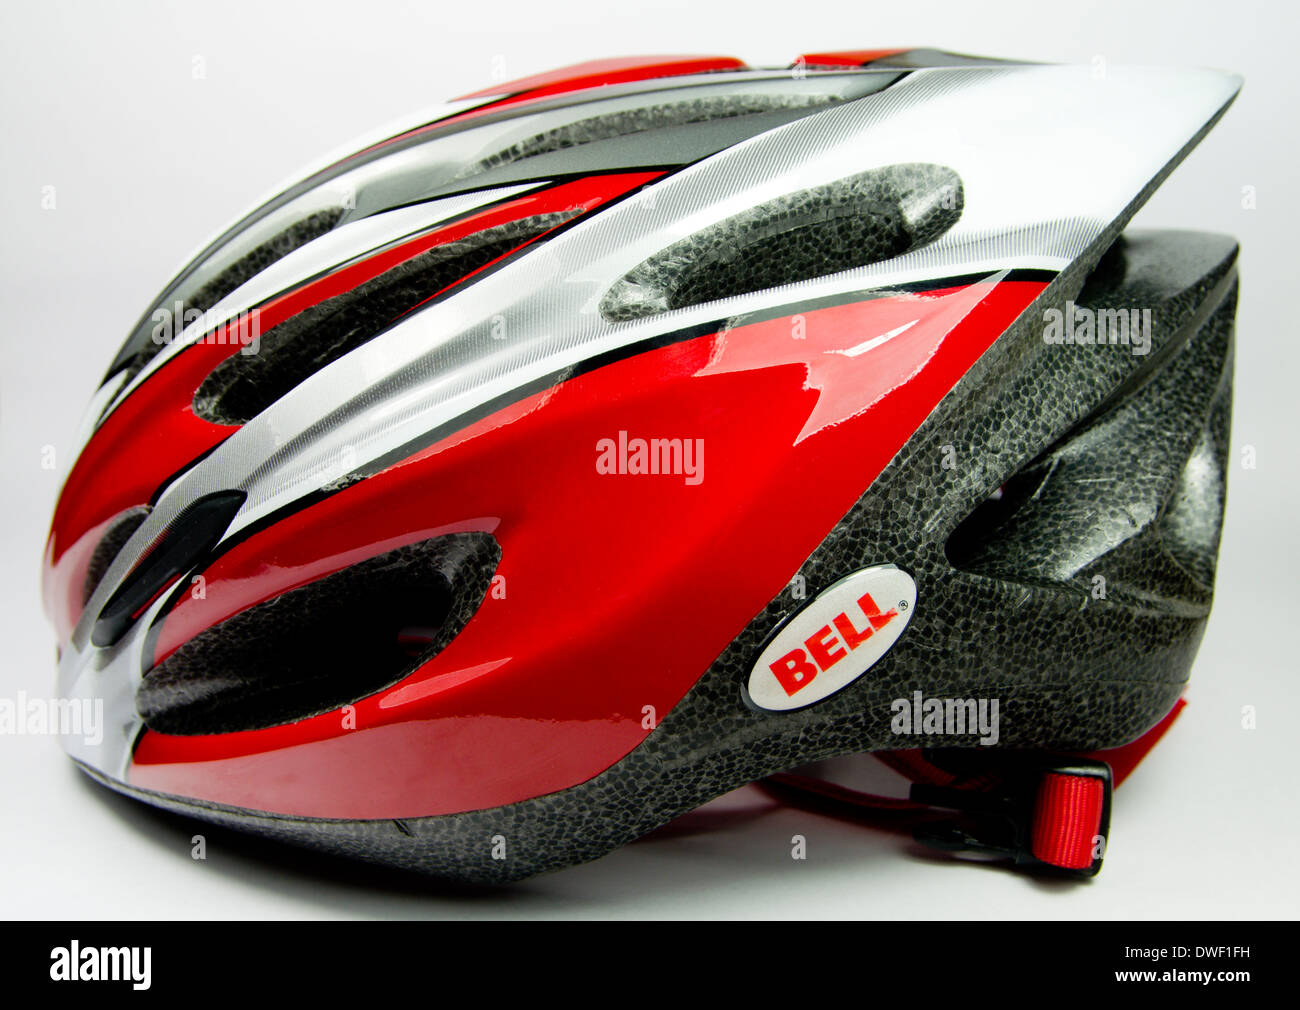 Ciclo Bell casco. Foto Stock